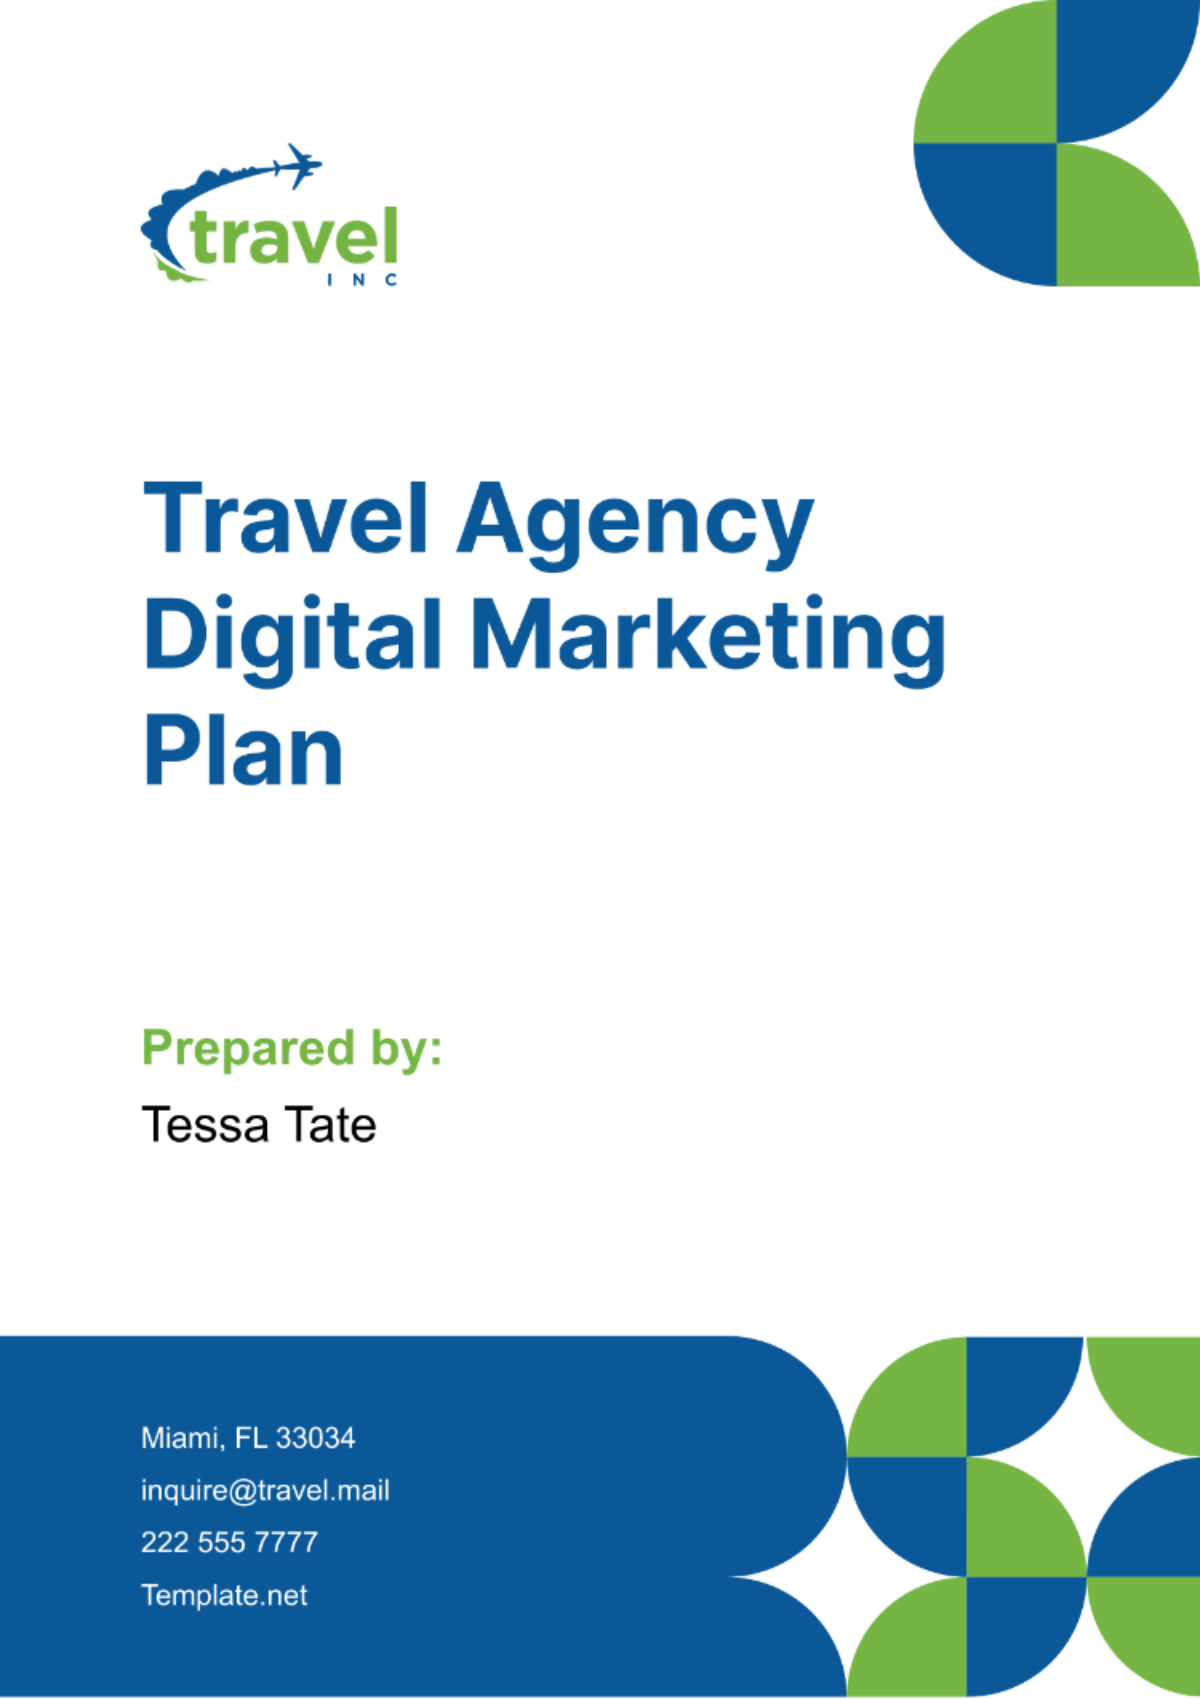 Travel Agency Digital Marketing Plan Template